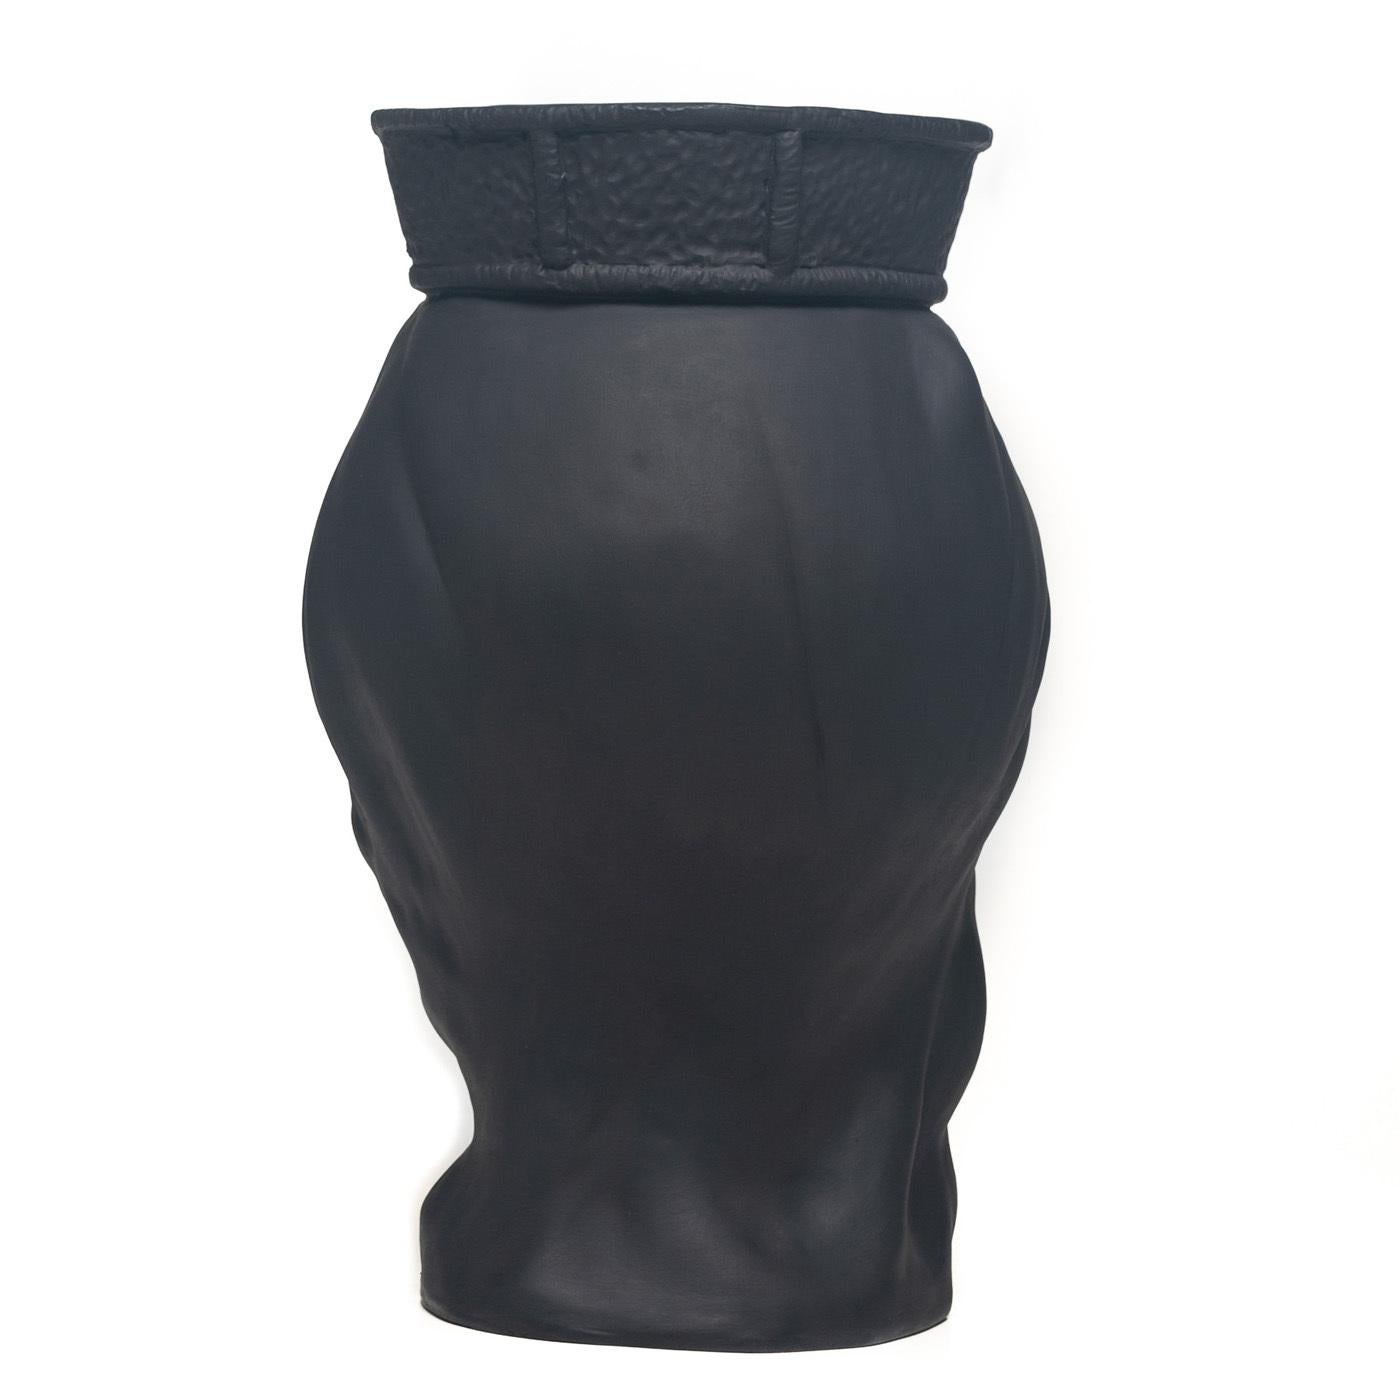 Monsieur Nox Head Vase In New Condition For Sale In Milan, IT